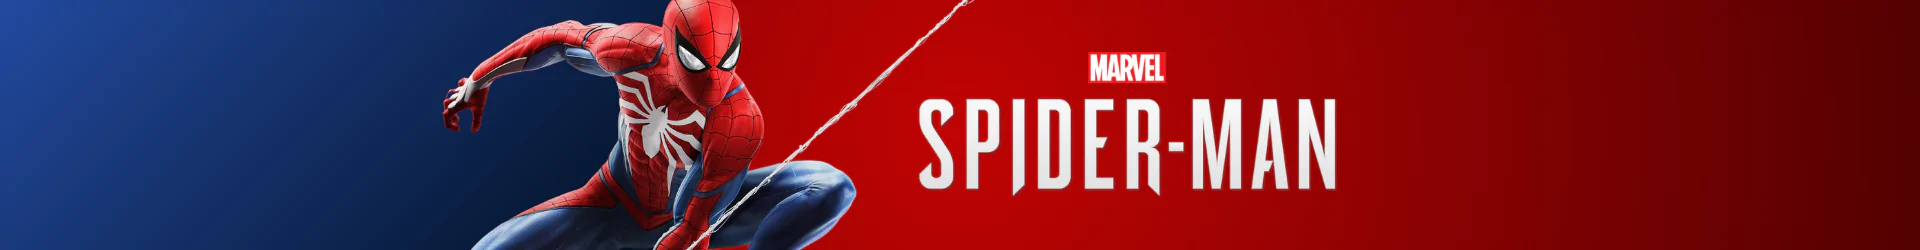 Spider-Man lamps banner